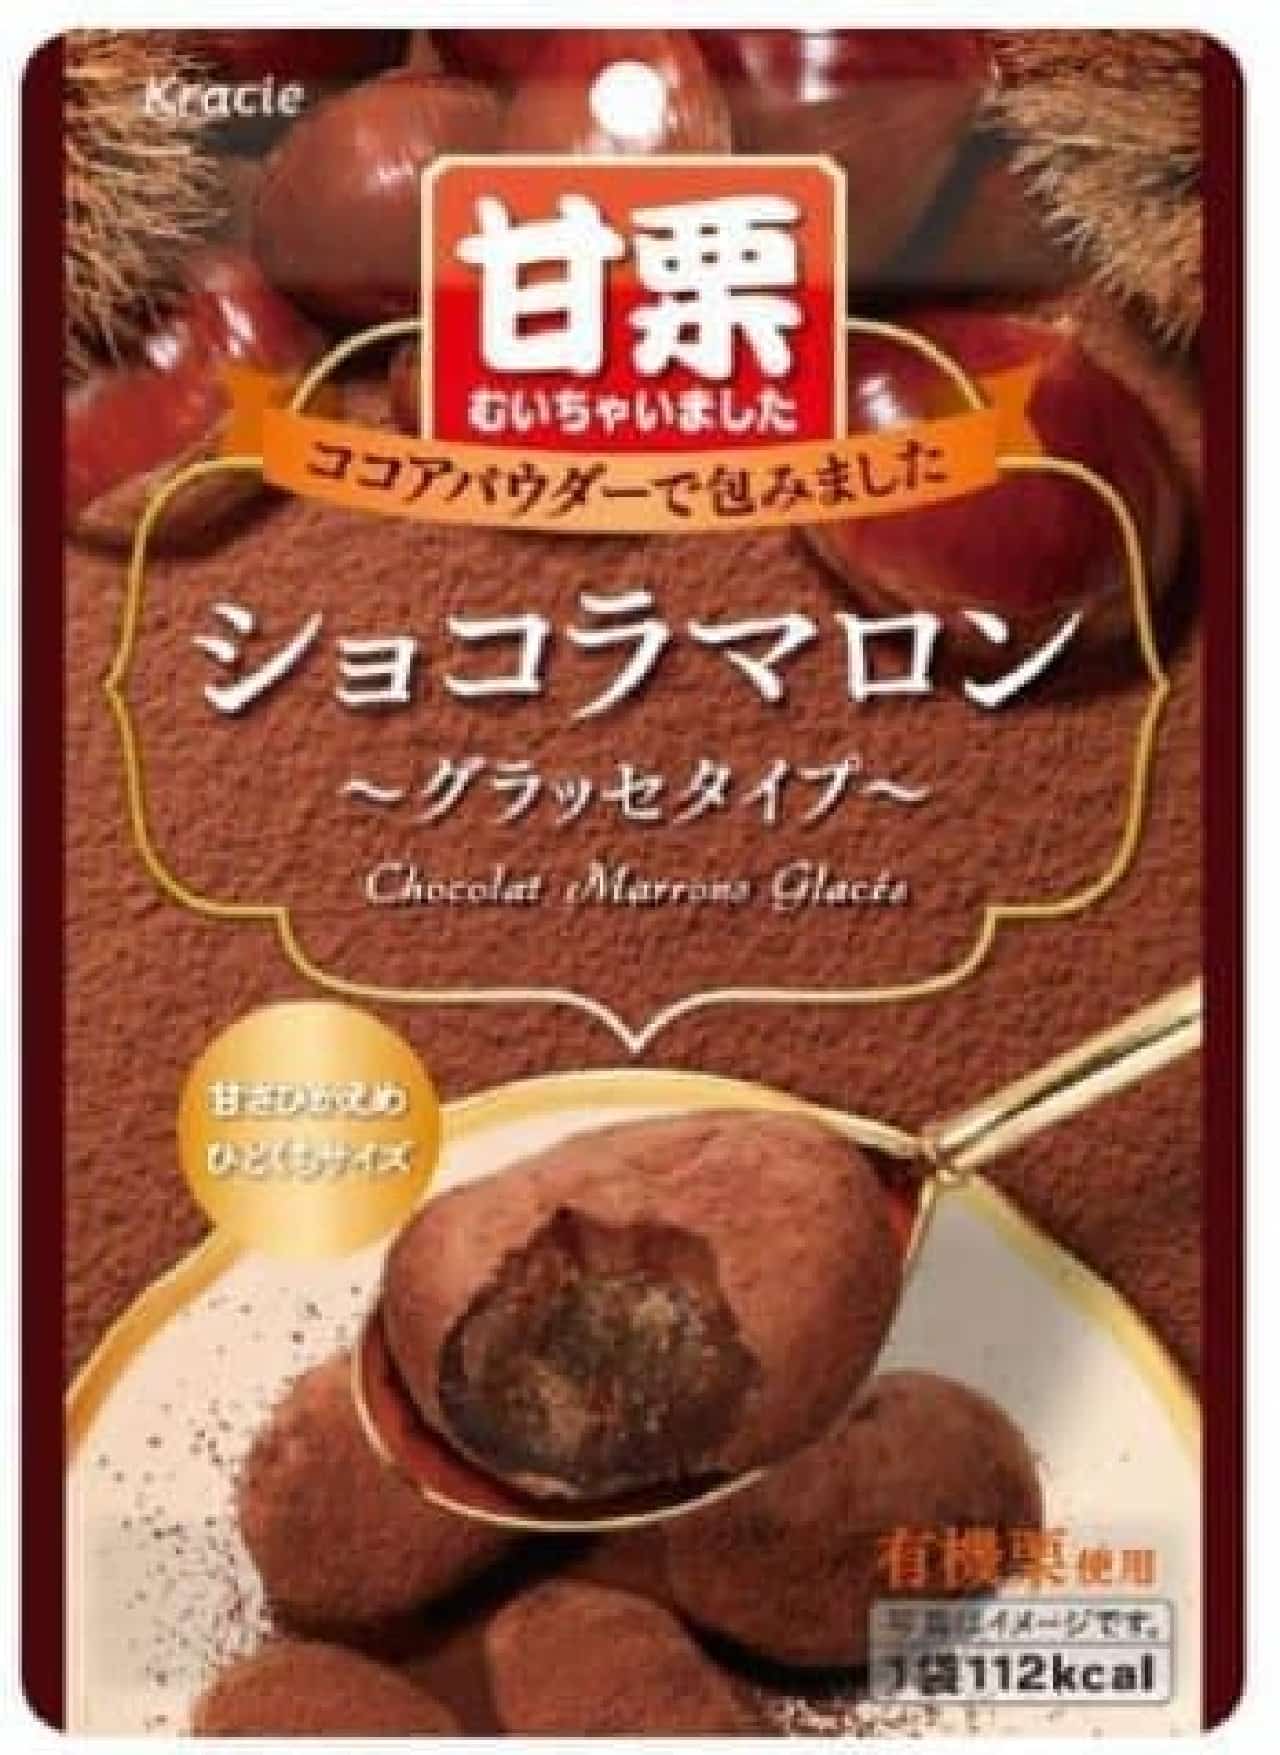 Easy luxury sweets "Marron Glacé"!